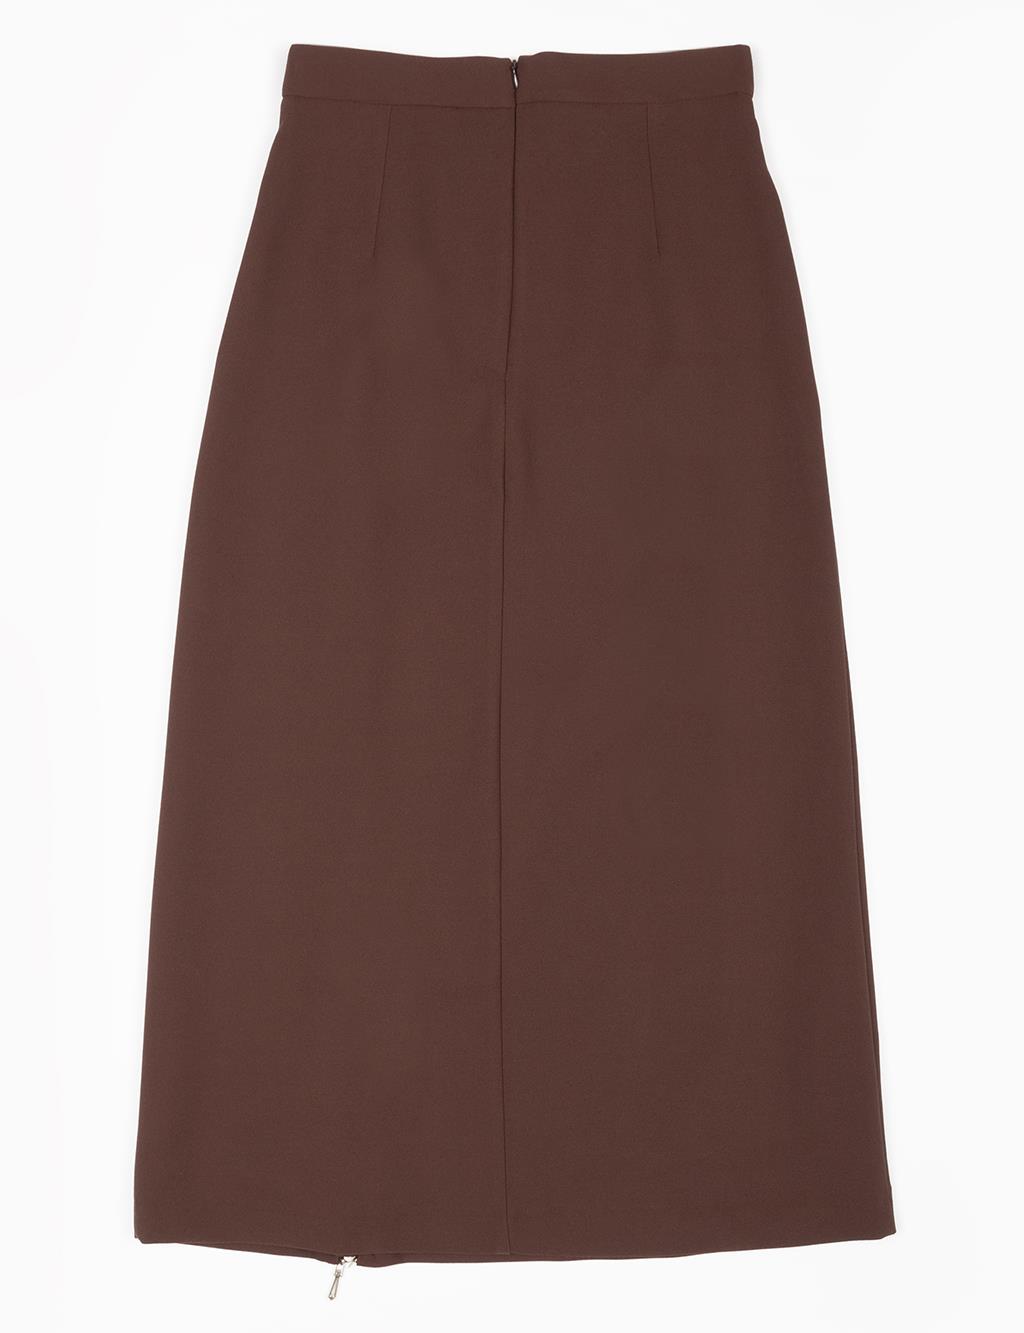 Zipper and Pleat Detailed Skirt Dark Brown